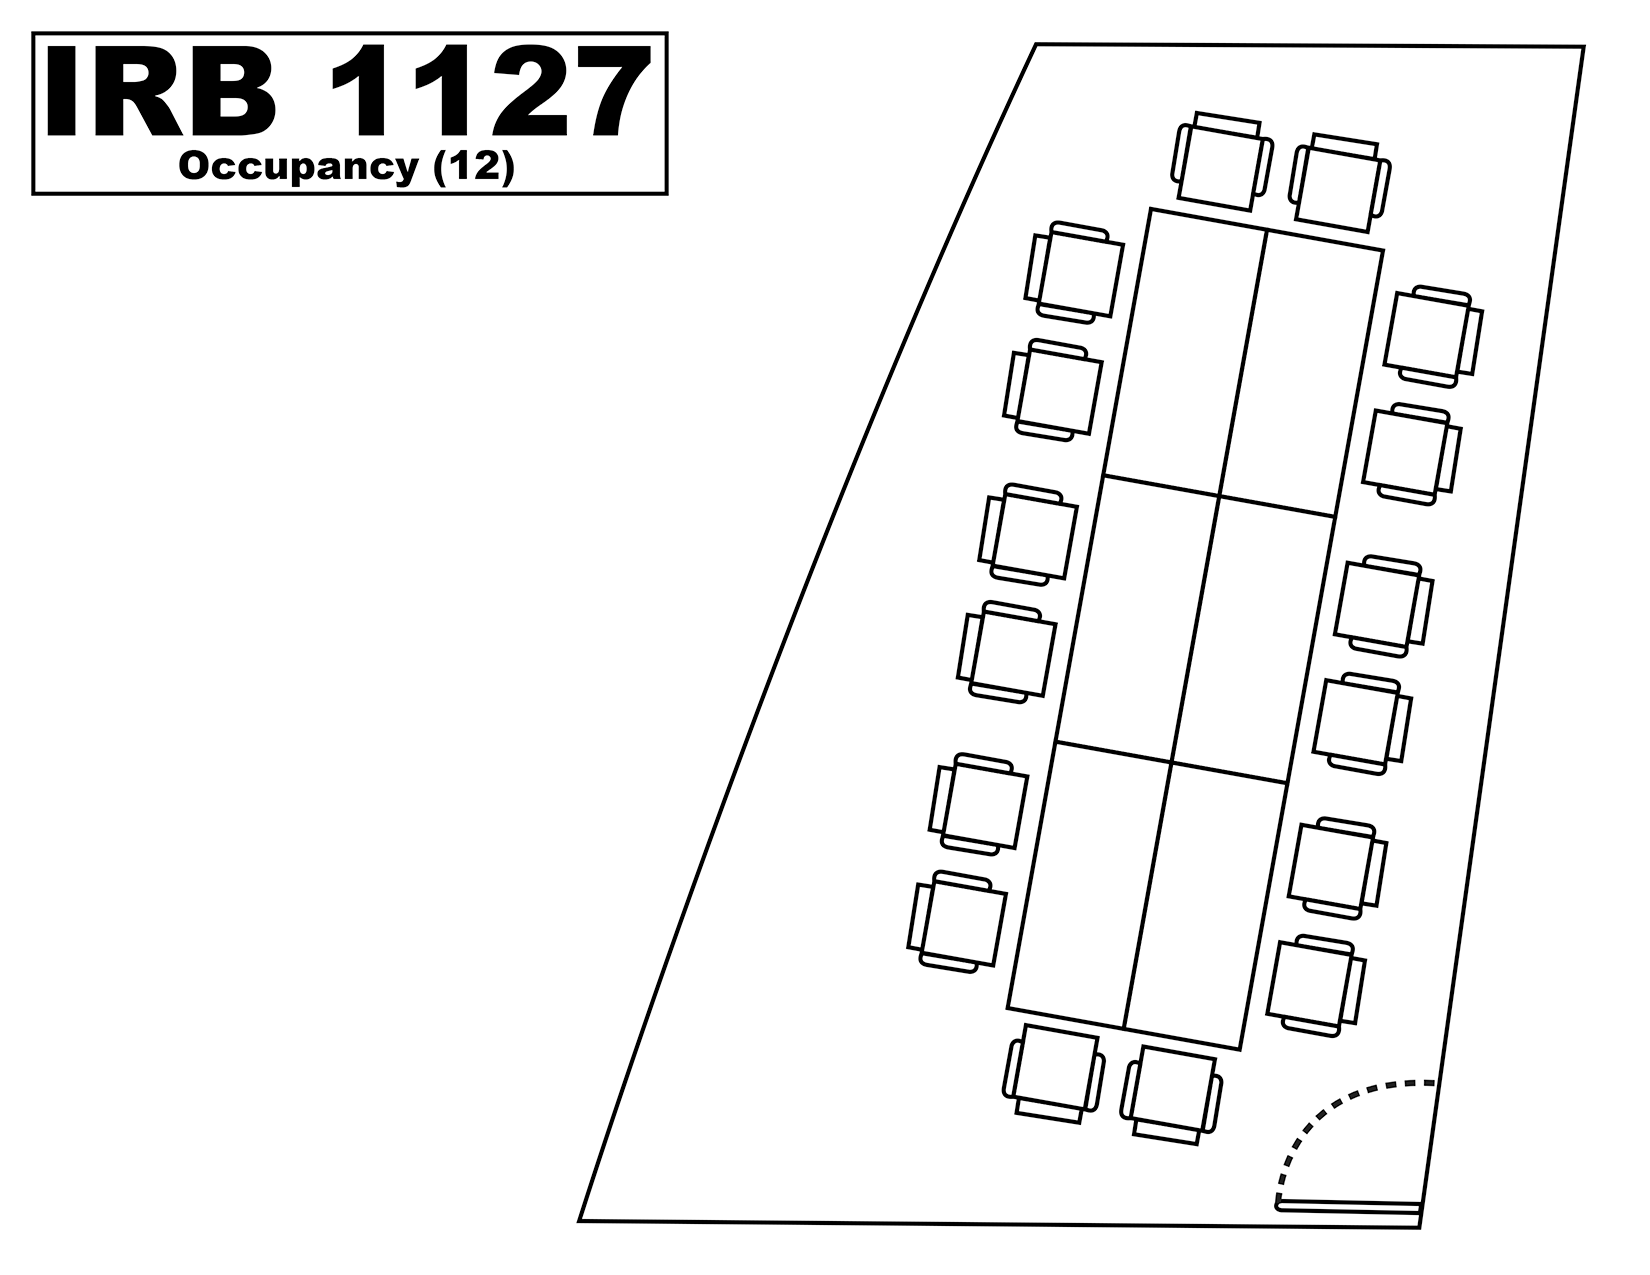 IRB1127 floorplan